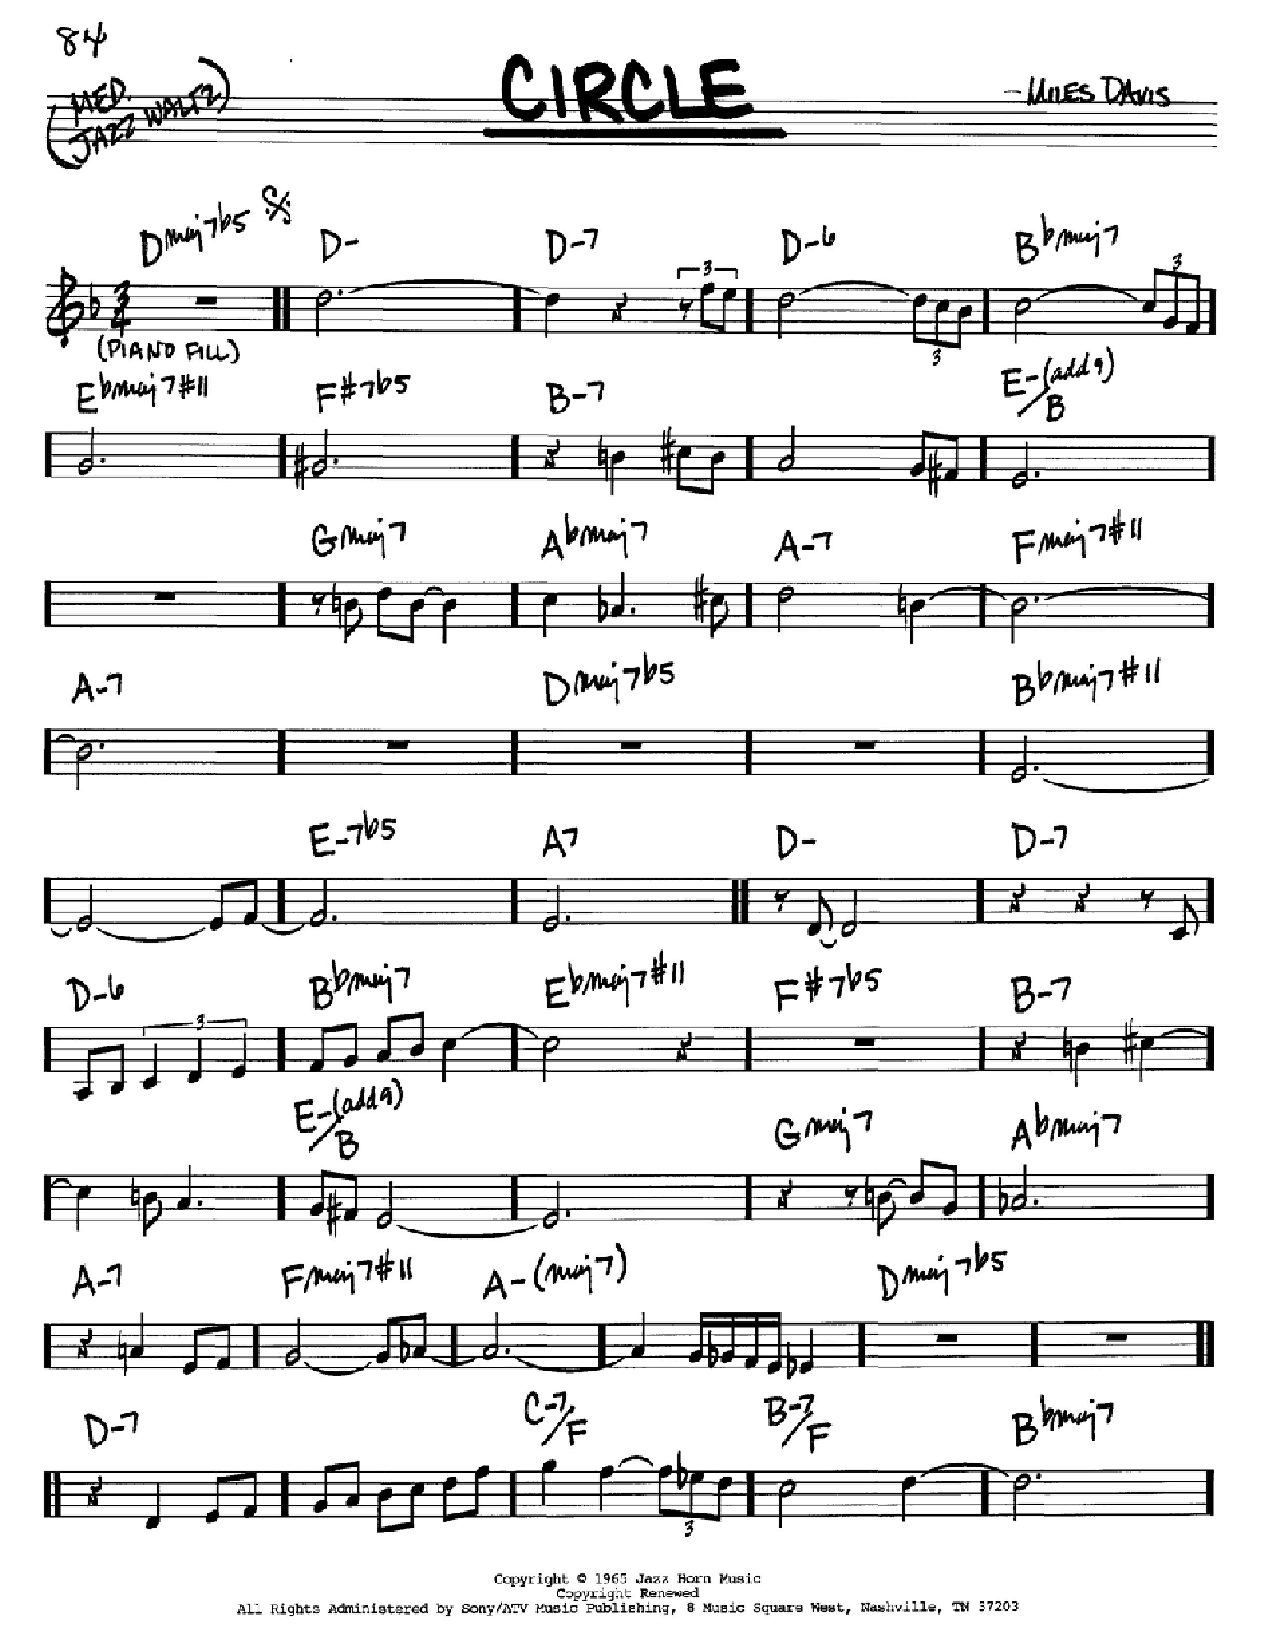 Miles Davis Circle Sheet Music Notes & Chords for Piano - Download or Print PDF